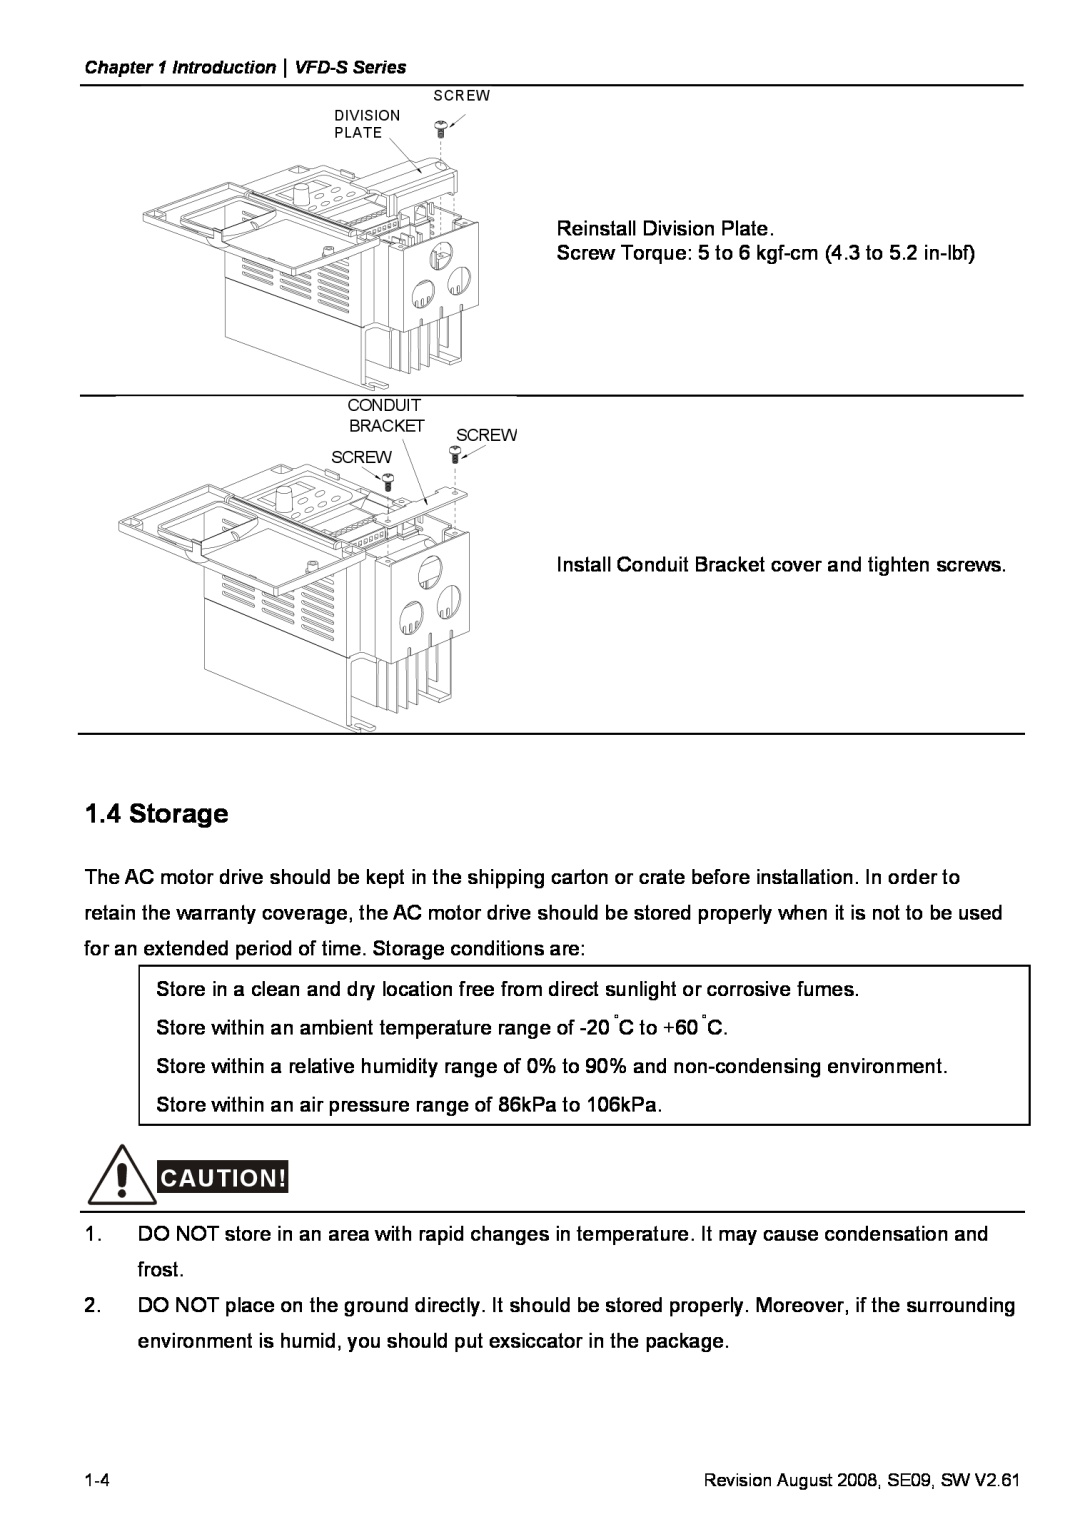 Delta Electronics VFD-S manual Storage 